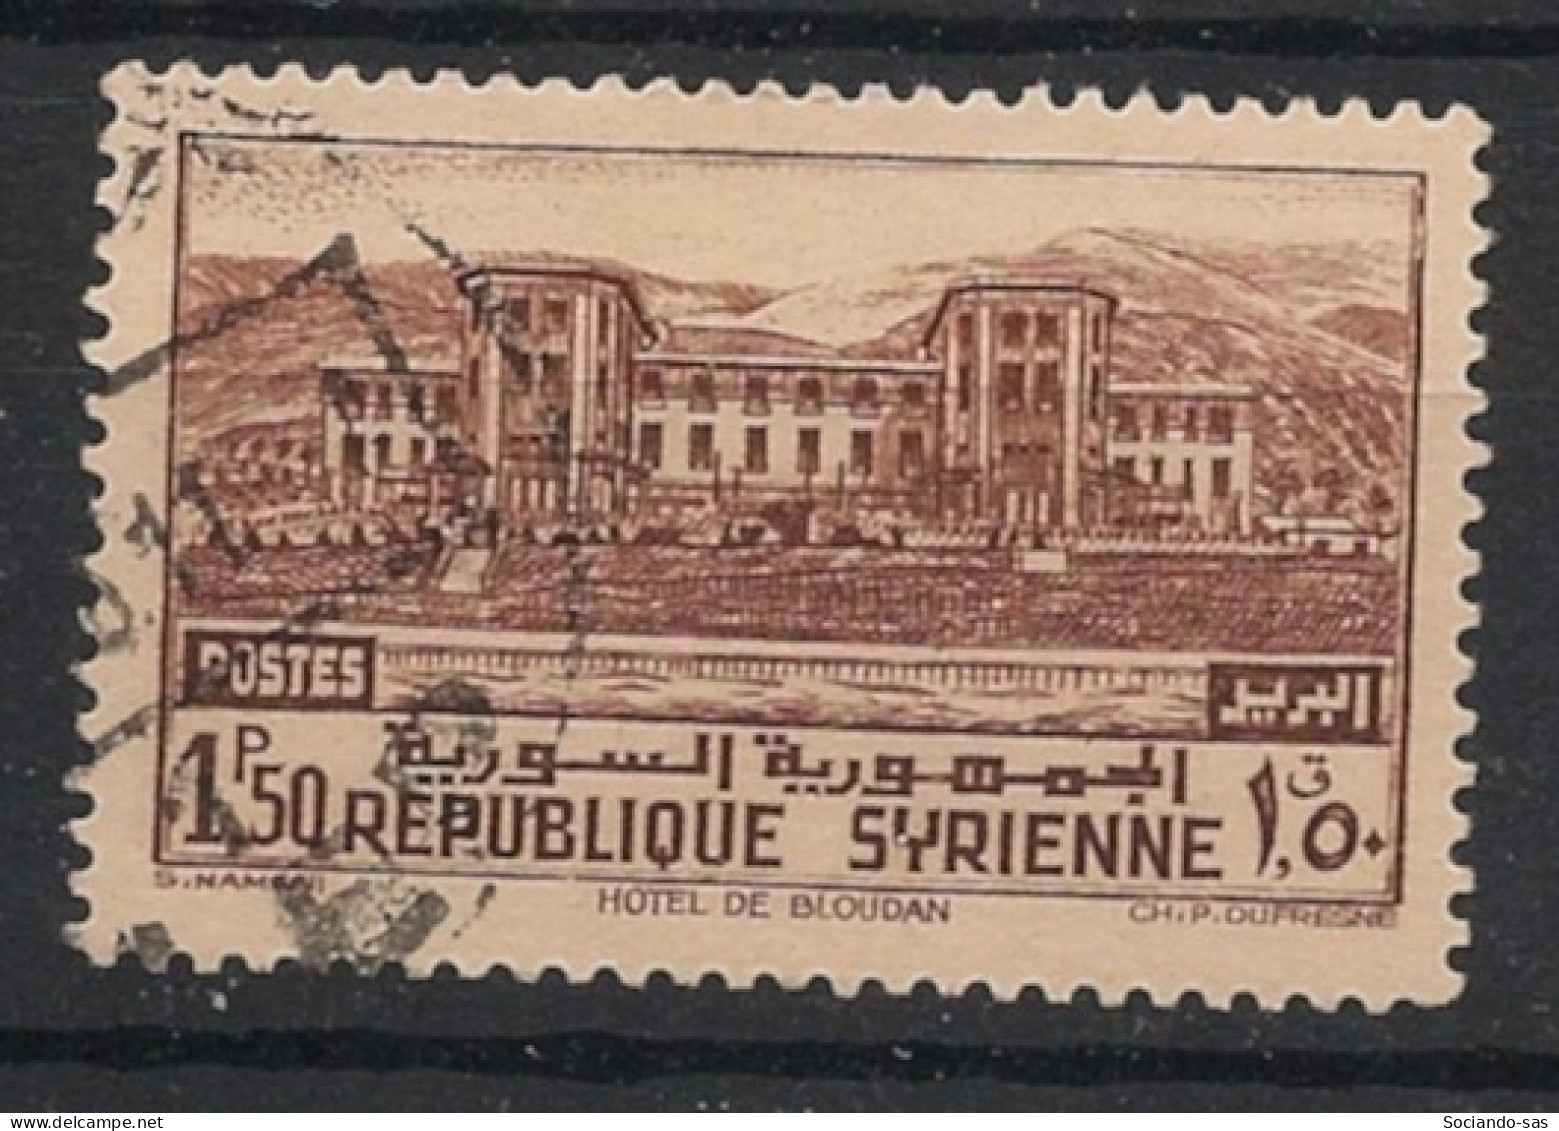 SYRIE - 1940 - N°YT. 255 - Bloudan 1pi50 - Oblitéré / Used - Oblitérés